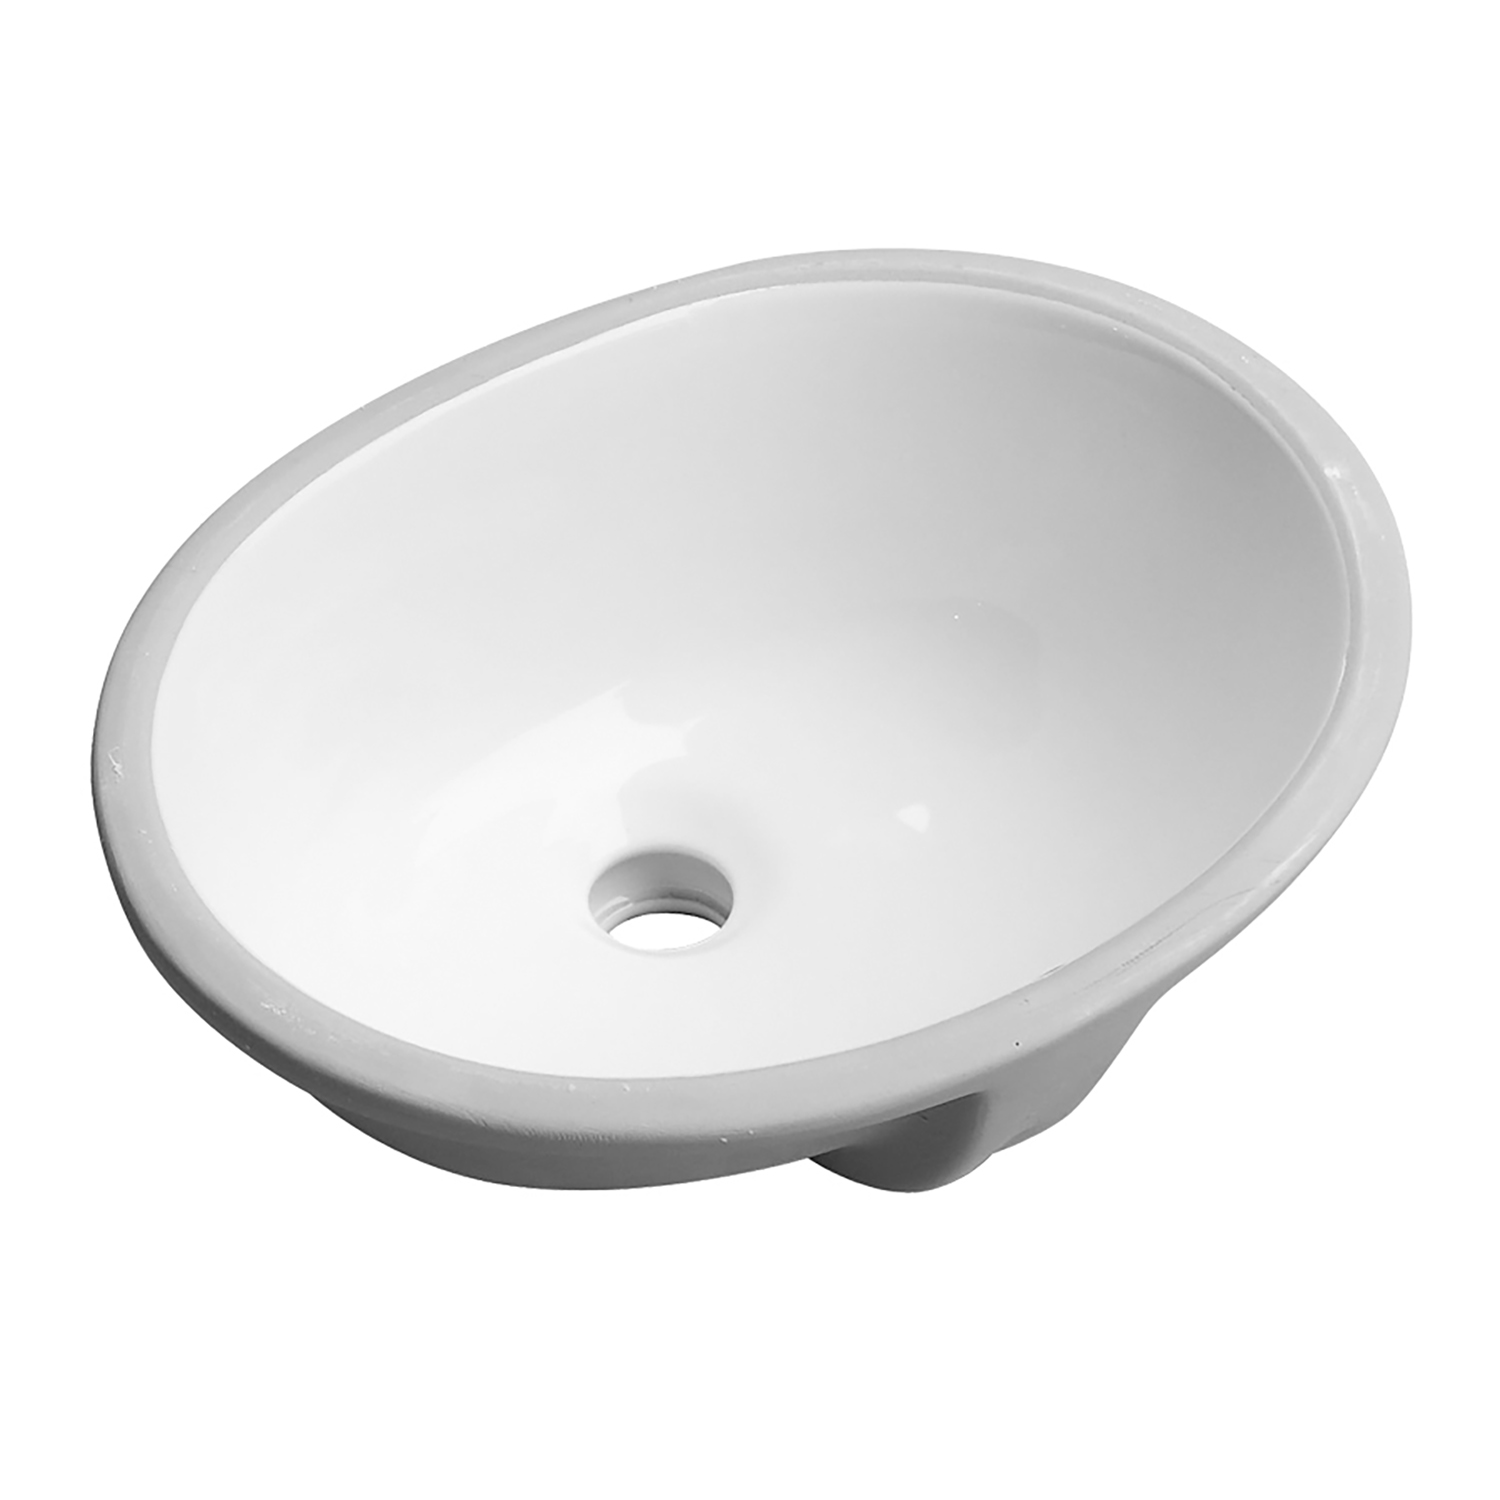 C4016 16" x 13" White Oval Ceramic Bathroom Vanity Undermount Sink